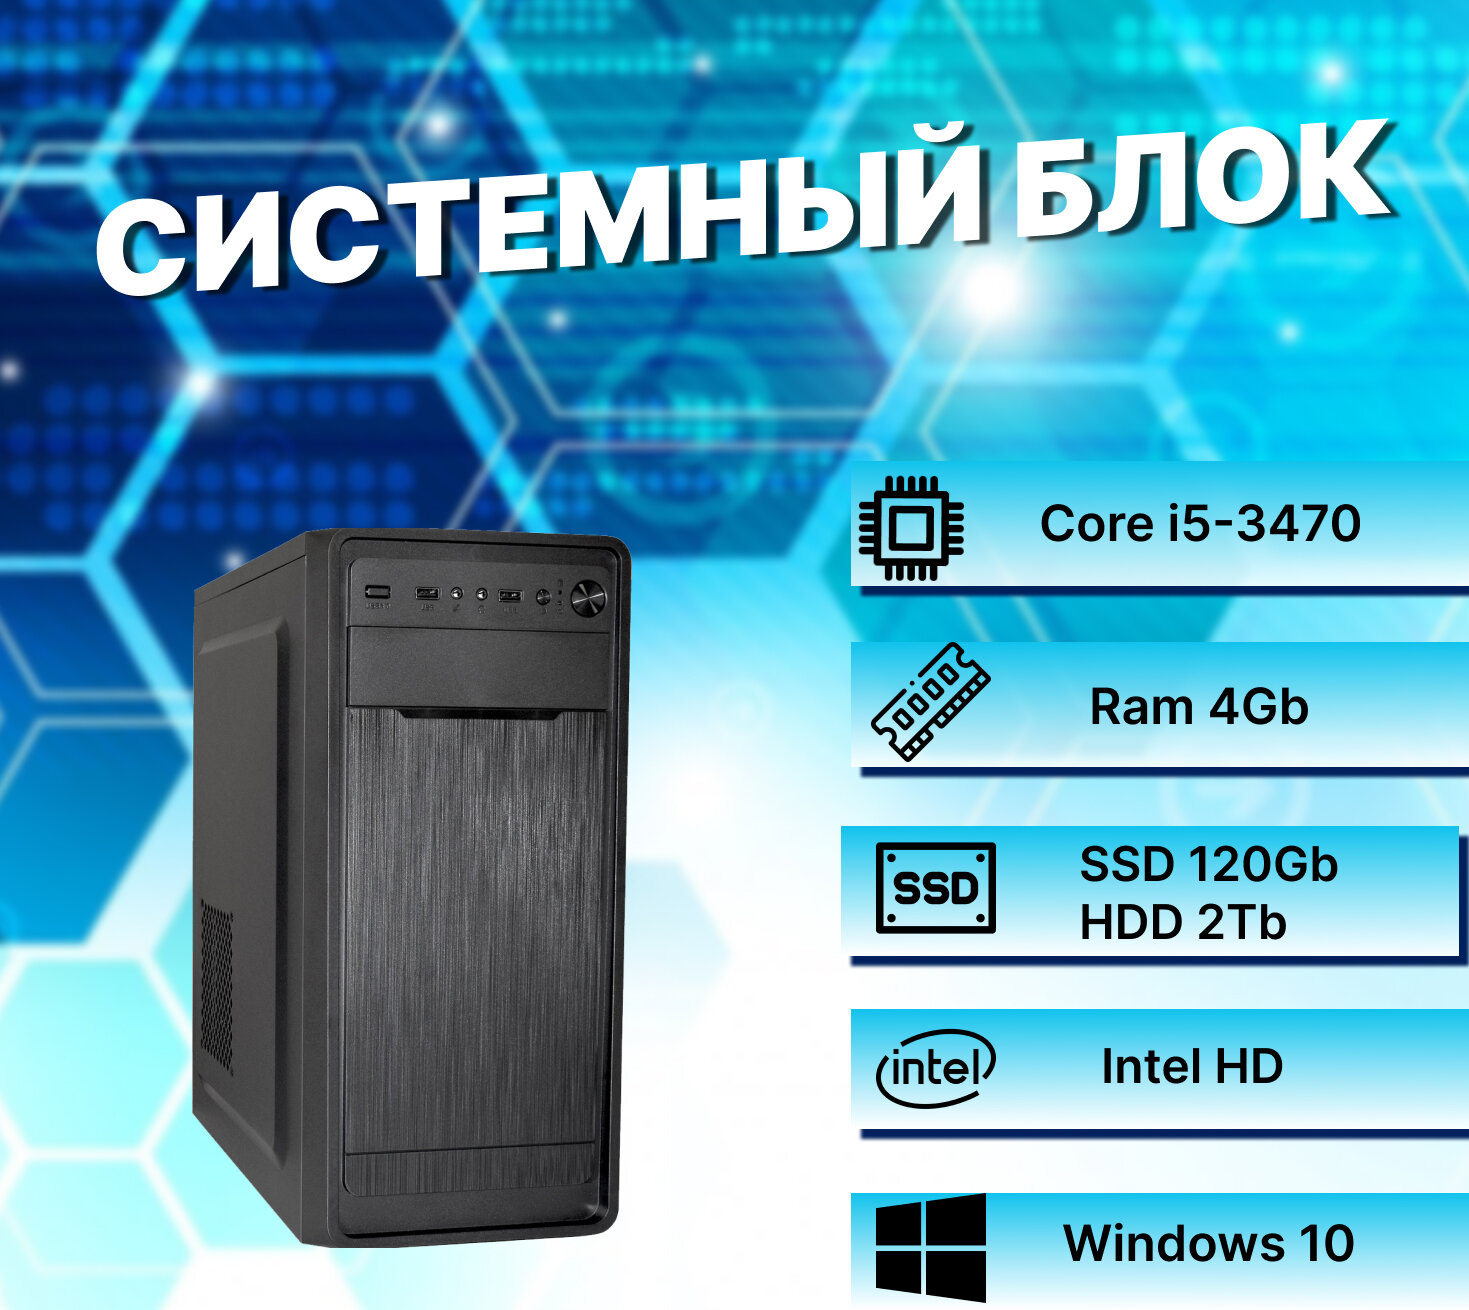 Системный блок Intel Core I5-3470 (3.2ГГц)/ RAM 4Gb/ SSD 120Gb/ HDD 2Tb/ Intel HD/ Windows 10 Pro